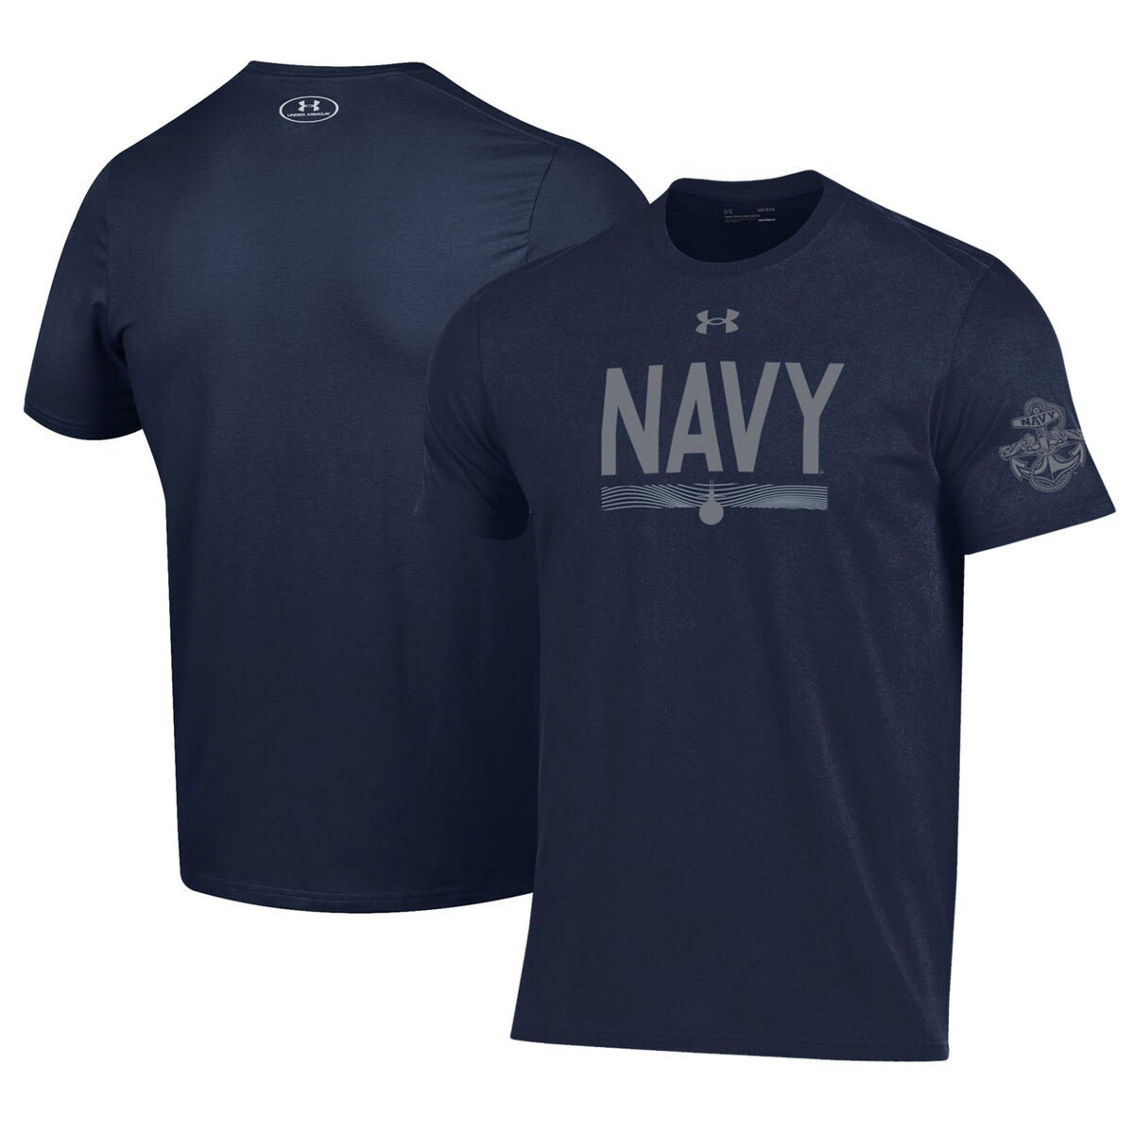 Under Armour Men's Navy Navy Midshipmen Silent Service T-Shirt - Image 2 of 4